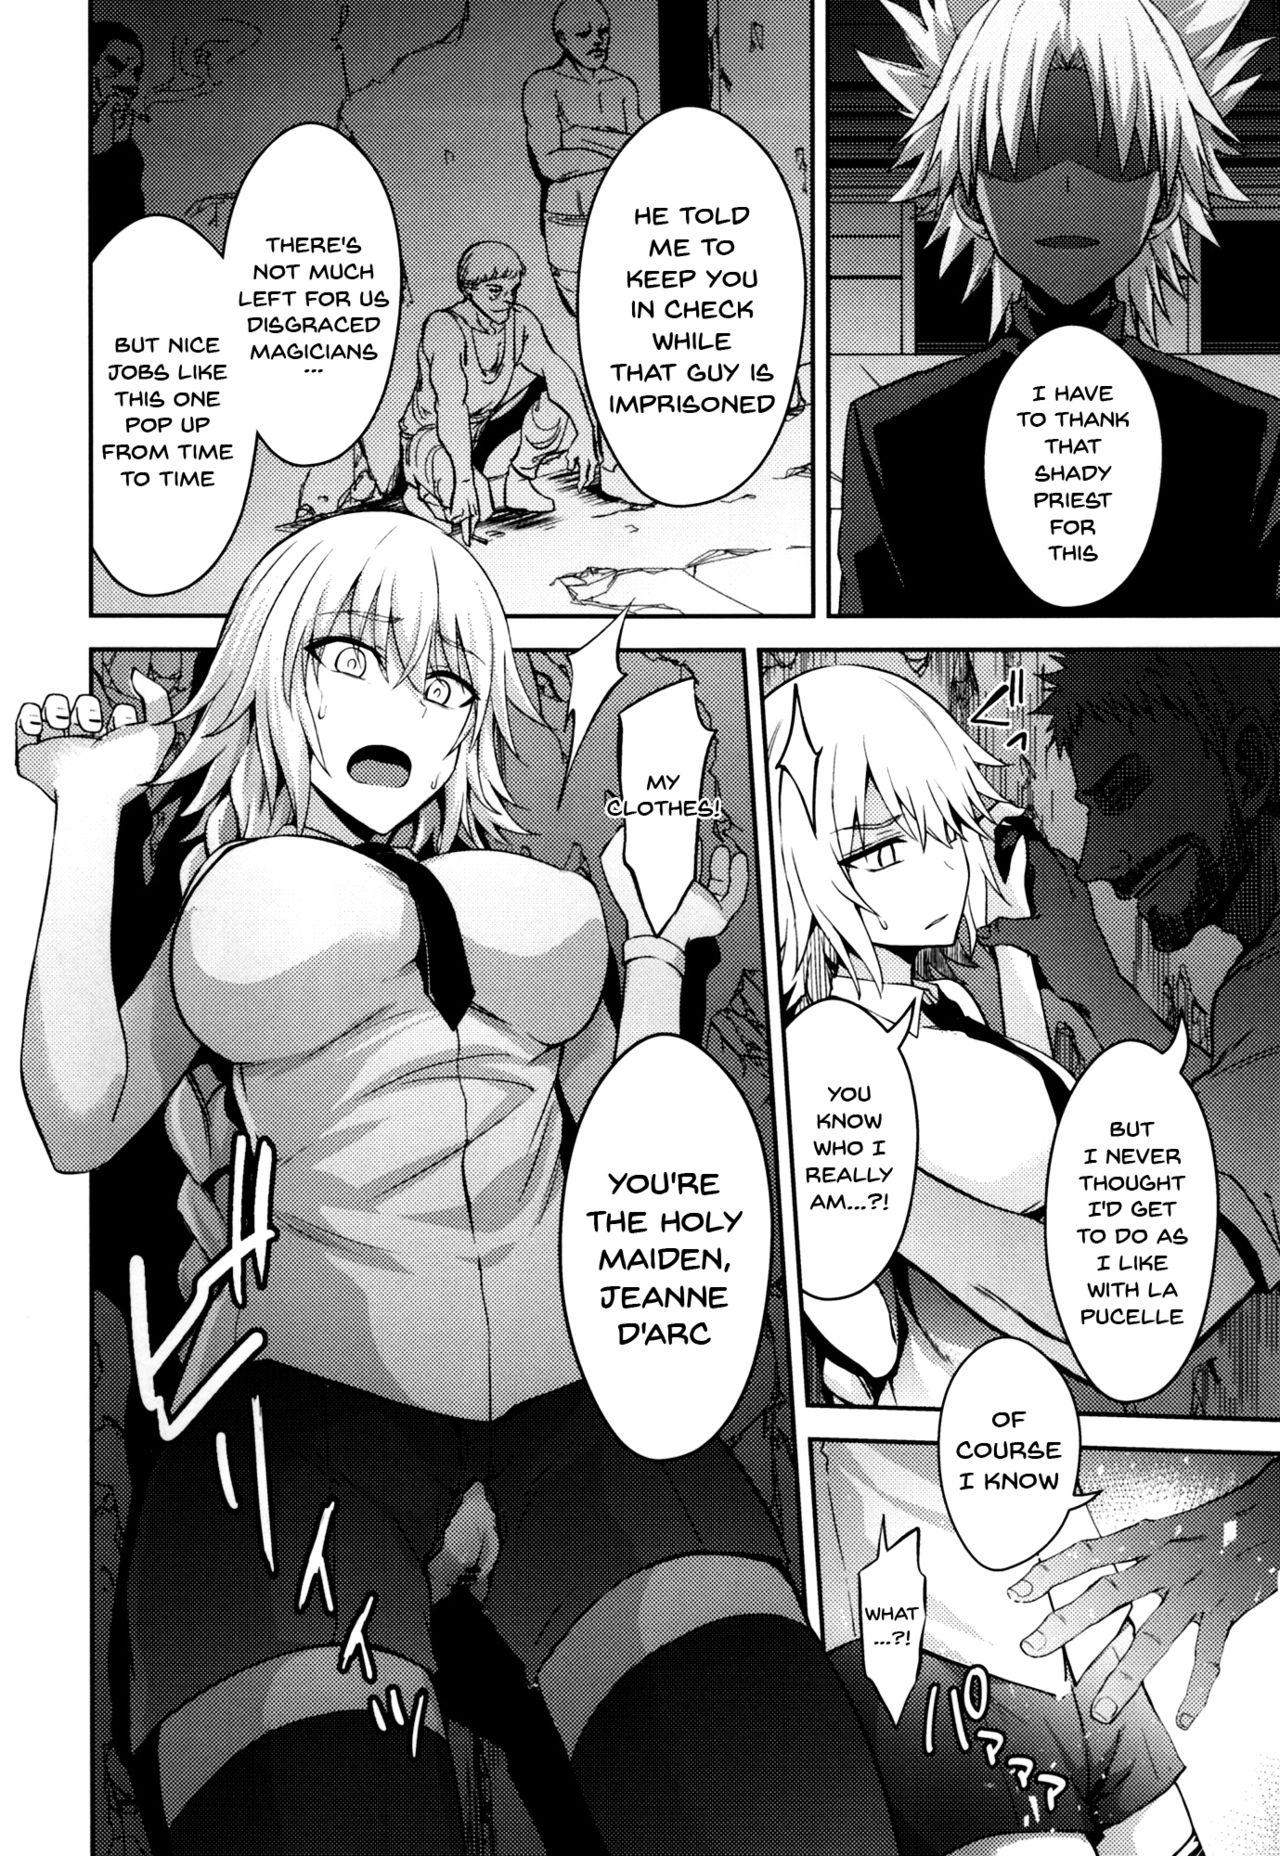 Banho Toraware no Saiteisha - Fate apocrypha Naked - Page 3